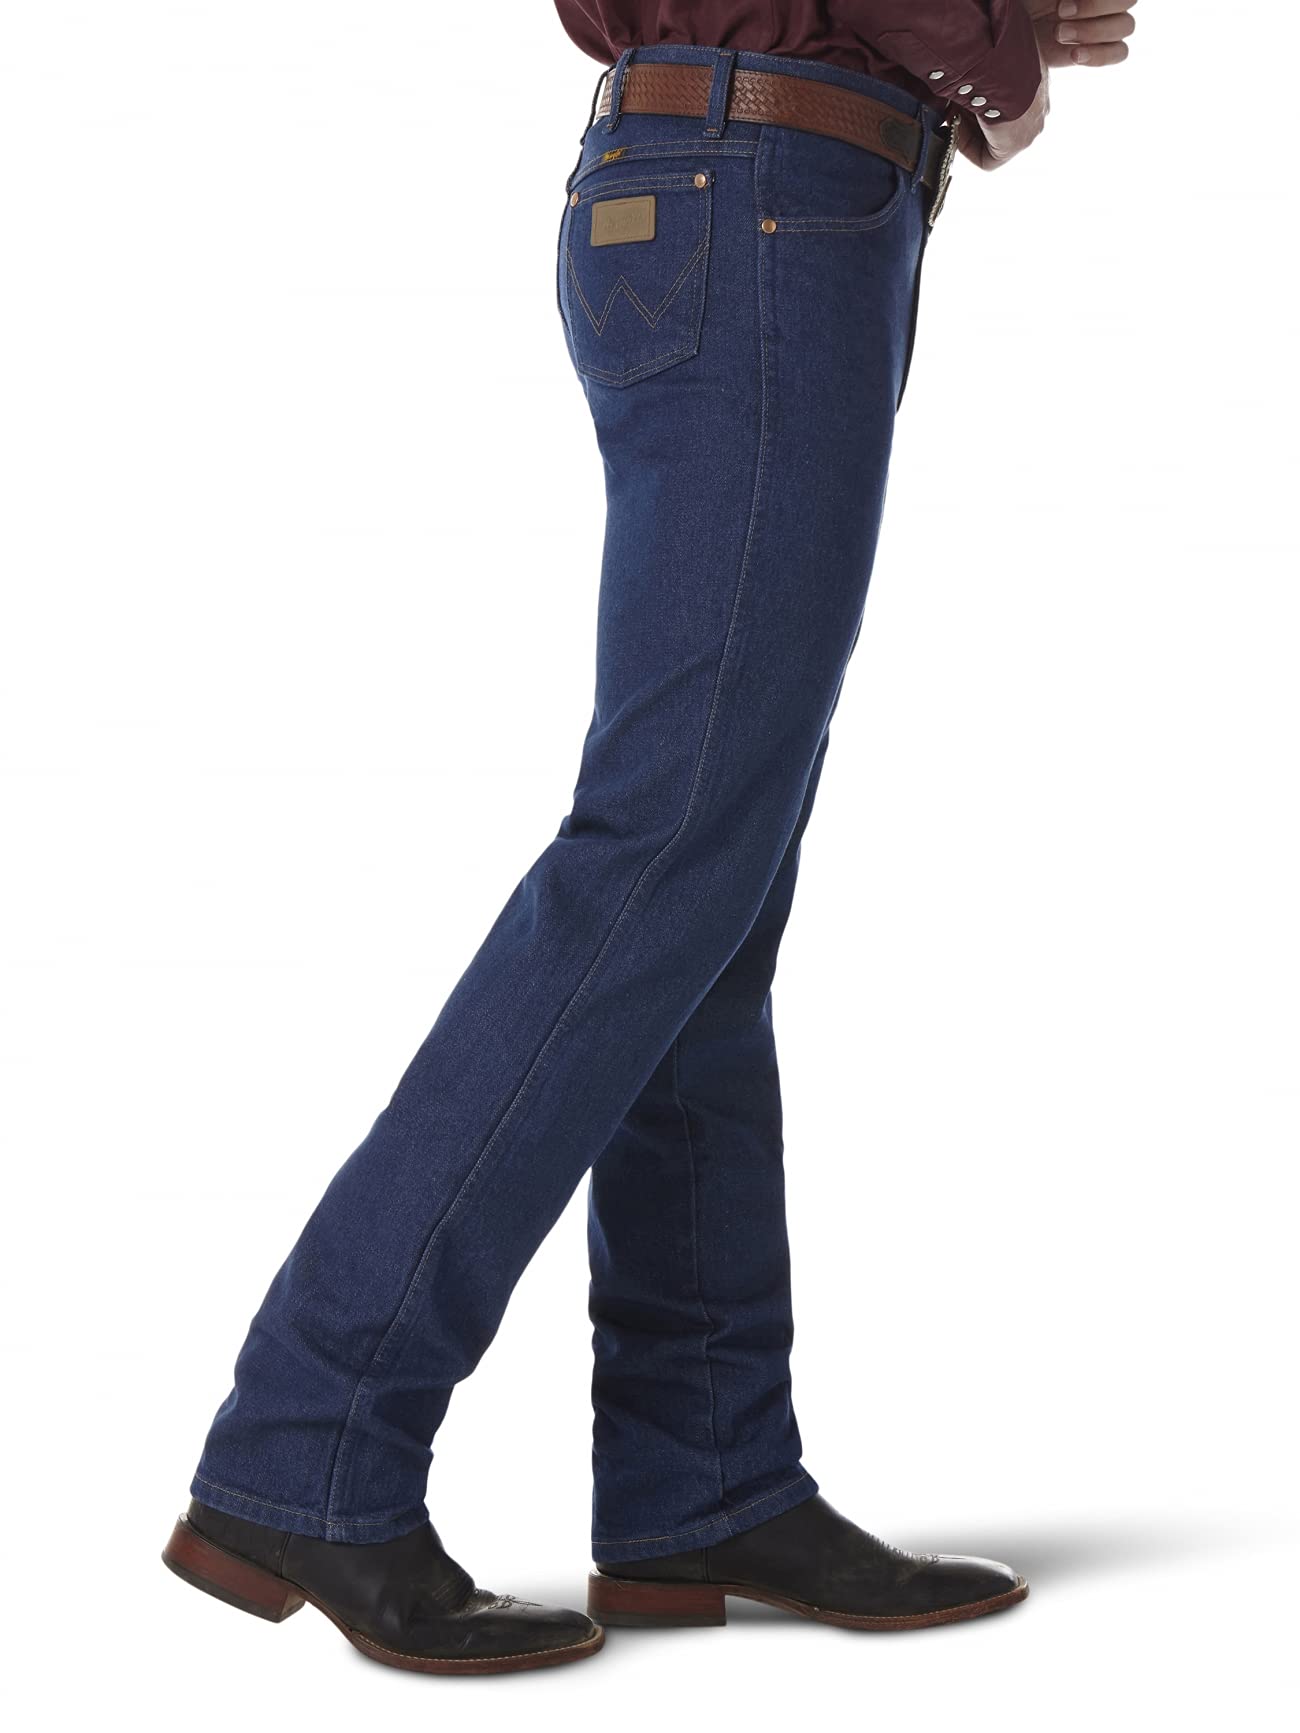 Wrangler Men's 0936 Cowboy Cut Slim Fit Jean